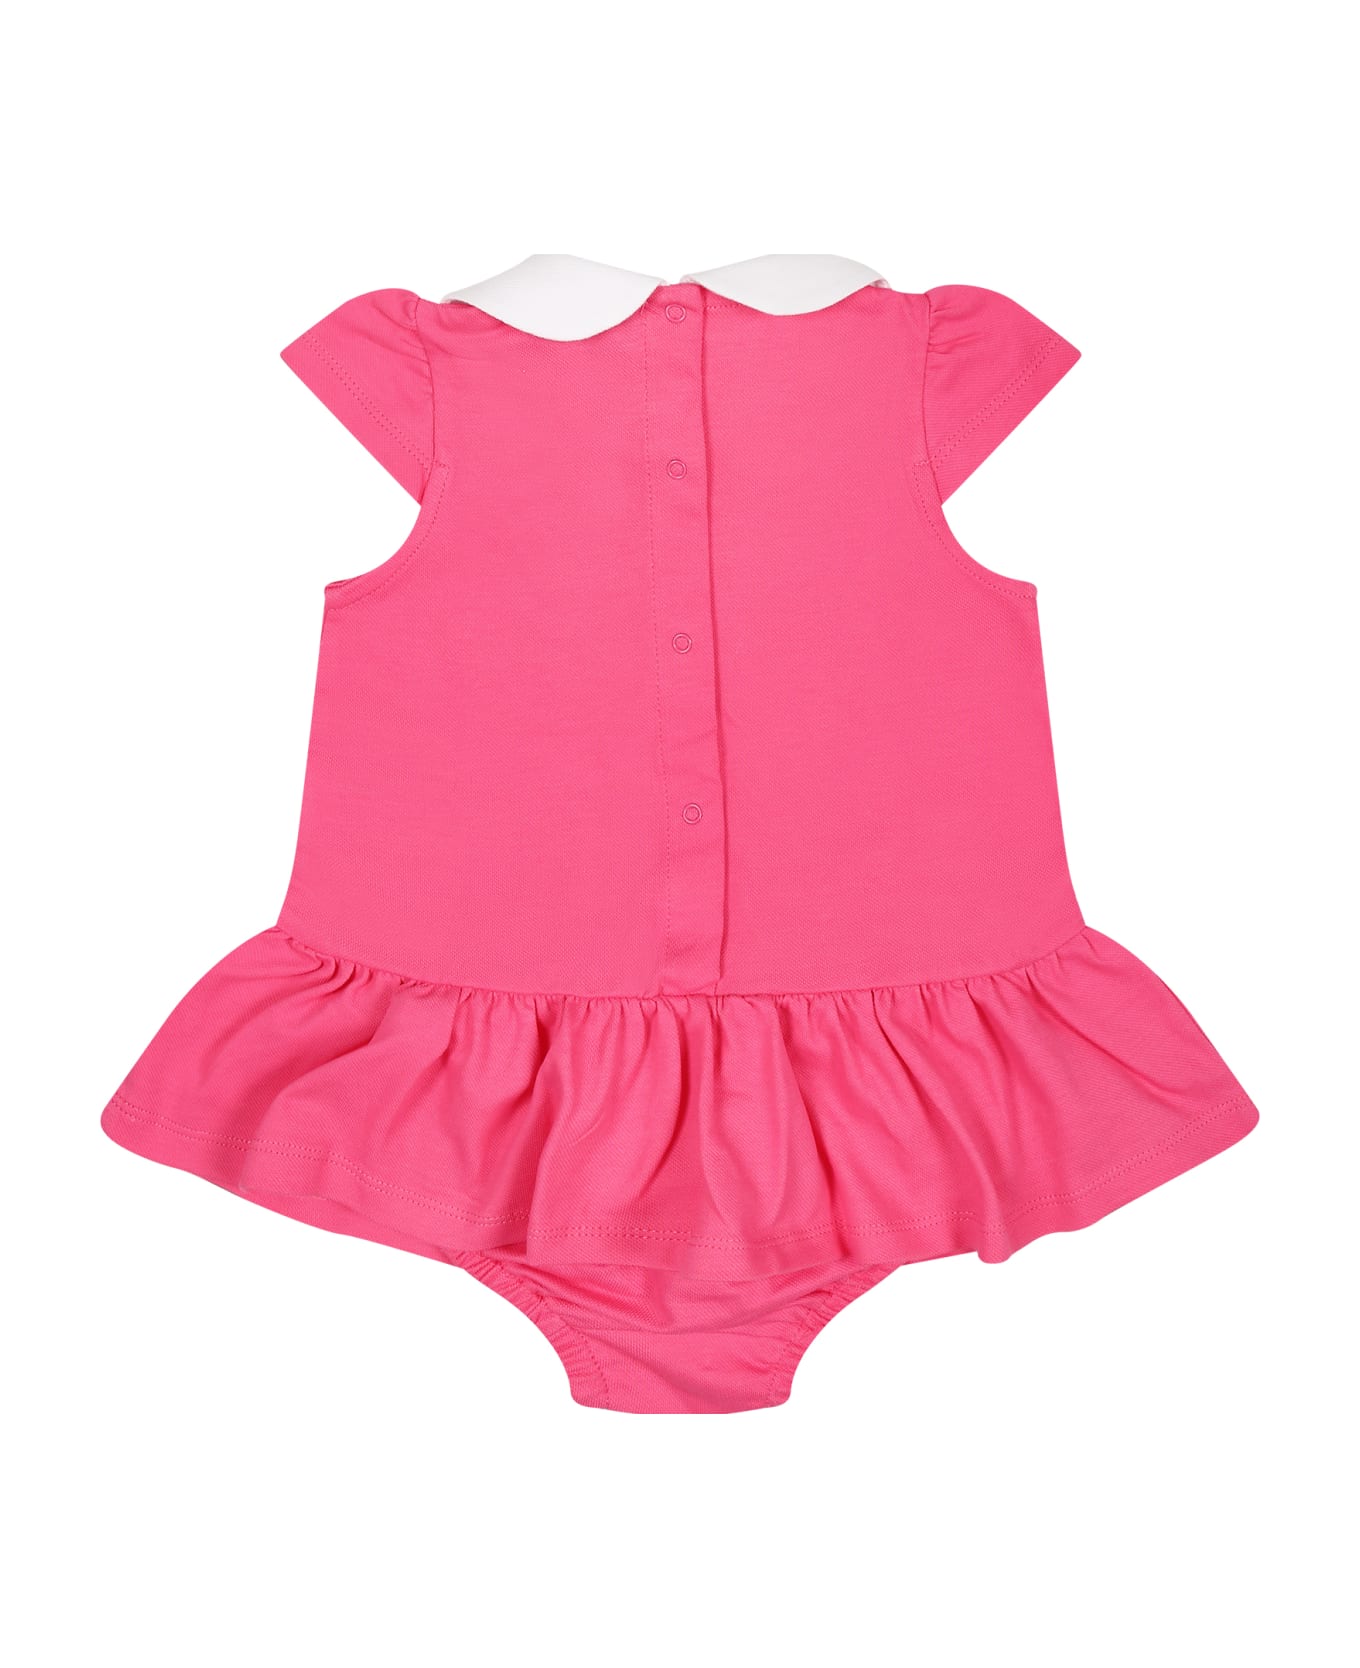 Moschino Fuchsia Dress For Baby Girl With Multicolor Teddy Bear - Fuchsia